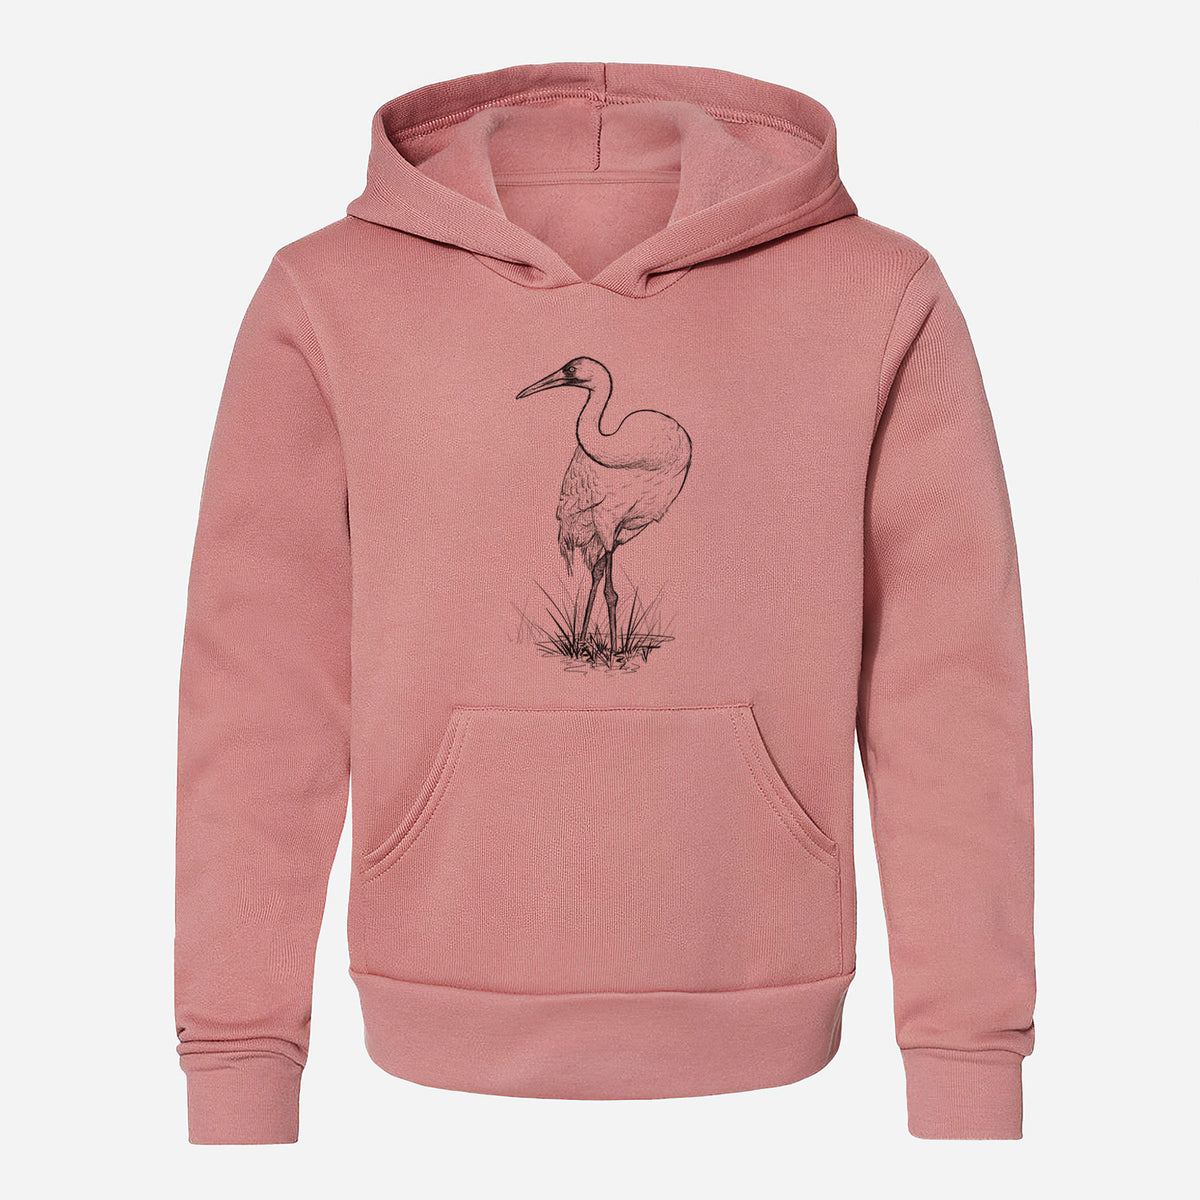 Whooping Crane - Grus americana - Youth Hoodie Sweatshirt